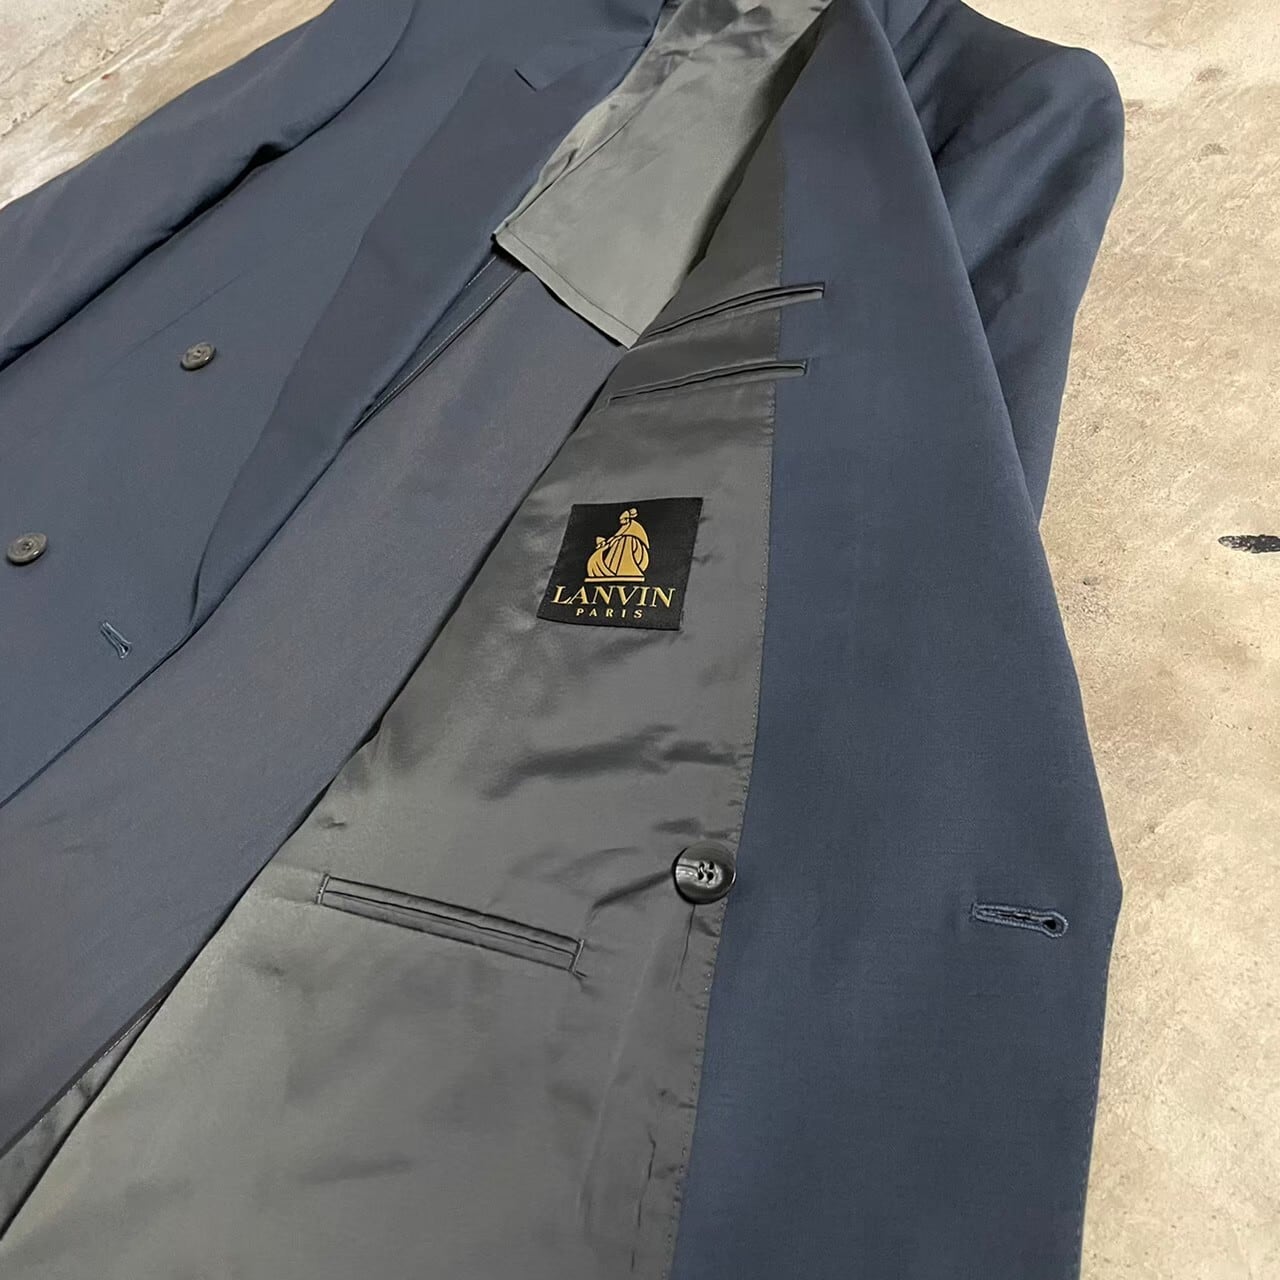 〖LANVIN〗navy color double setup suit /ランバン ネイビー ダブル セットアップ  スーツ/msize/#0305/osaka | 〚ETON_VINTAGE〛 powered by BASE